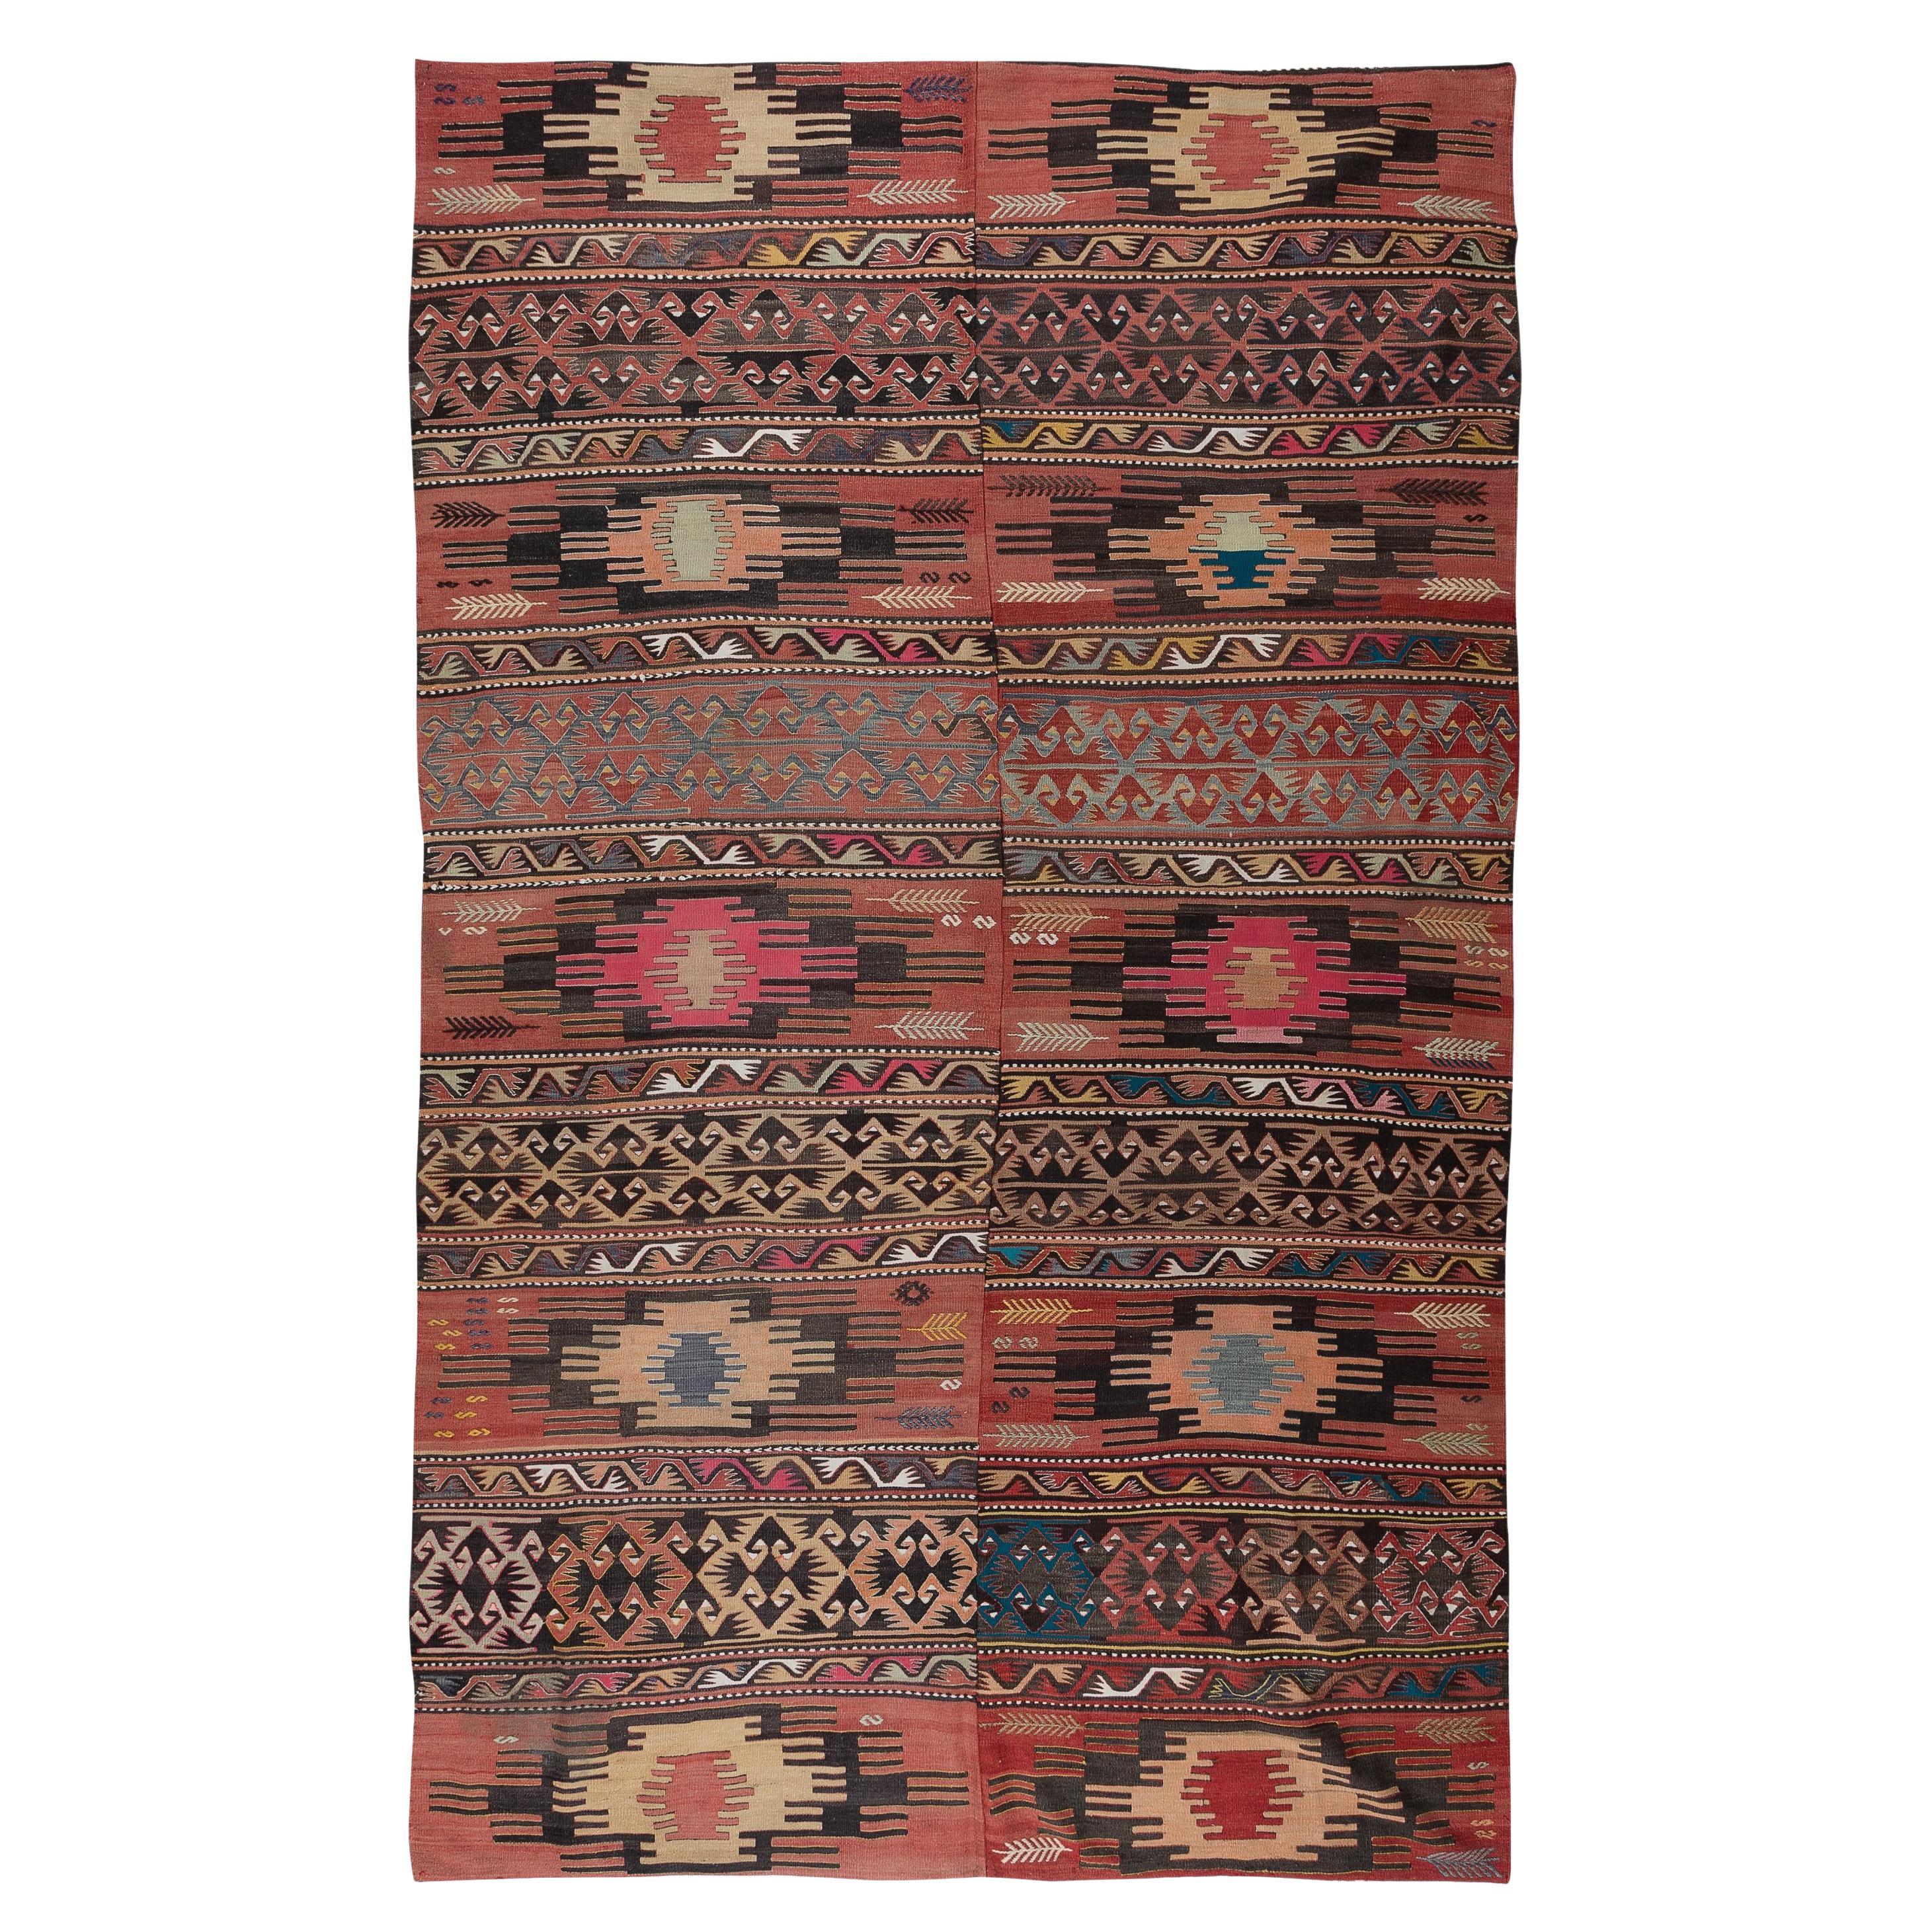 6.3x10.2 Ft Vintage Hand-Woven Nomadic Anatolian Kilim 'Flat-Weave', 100% Wool